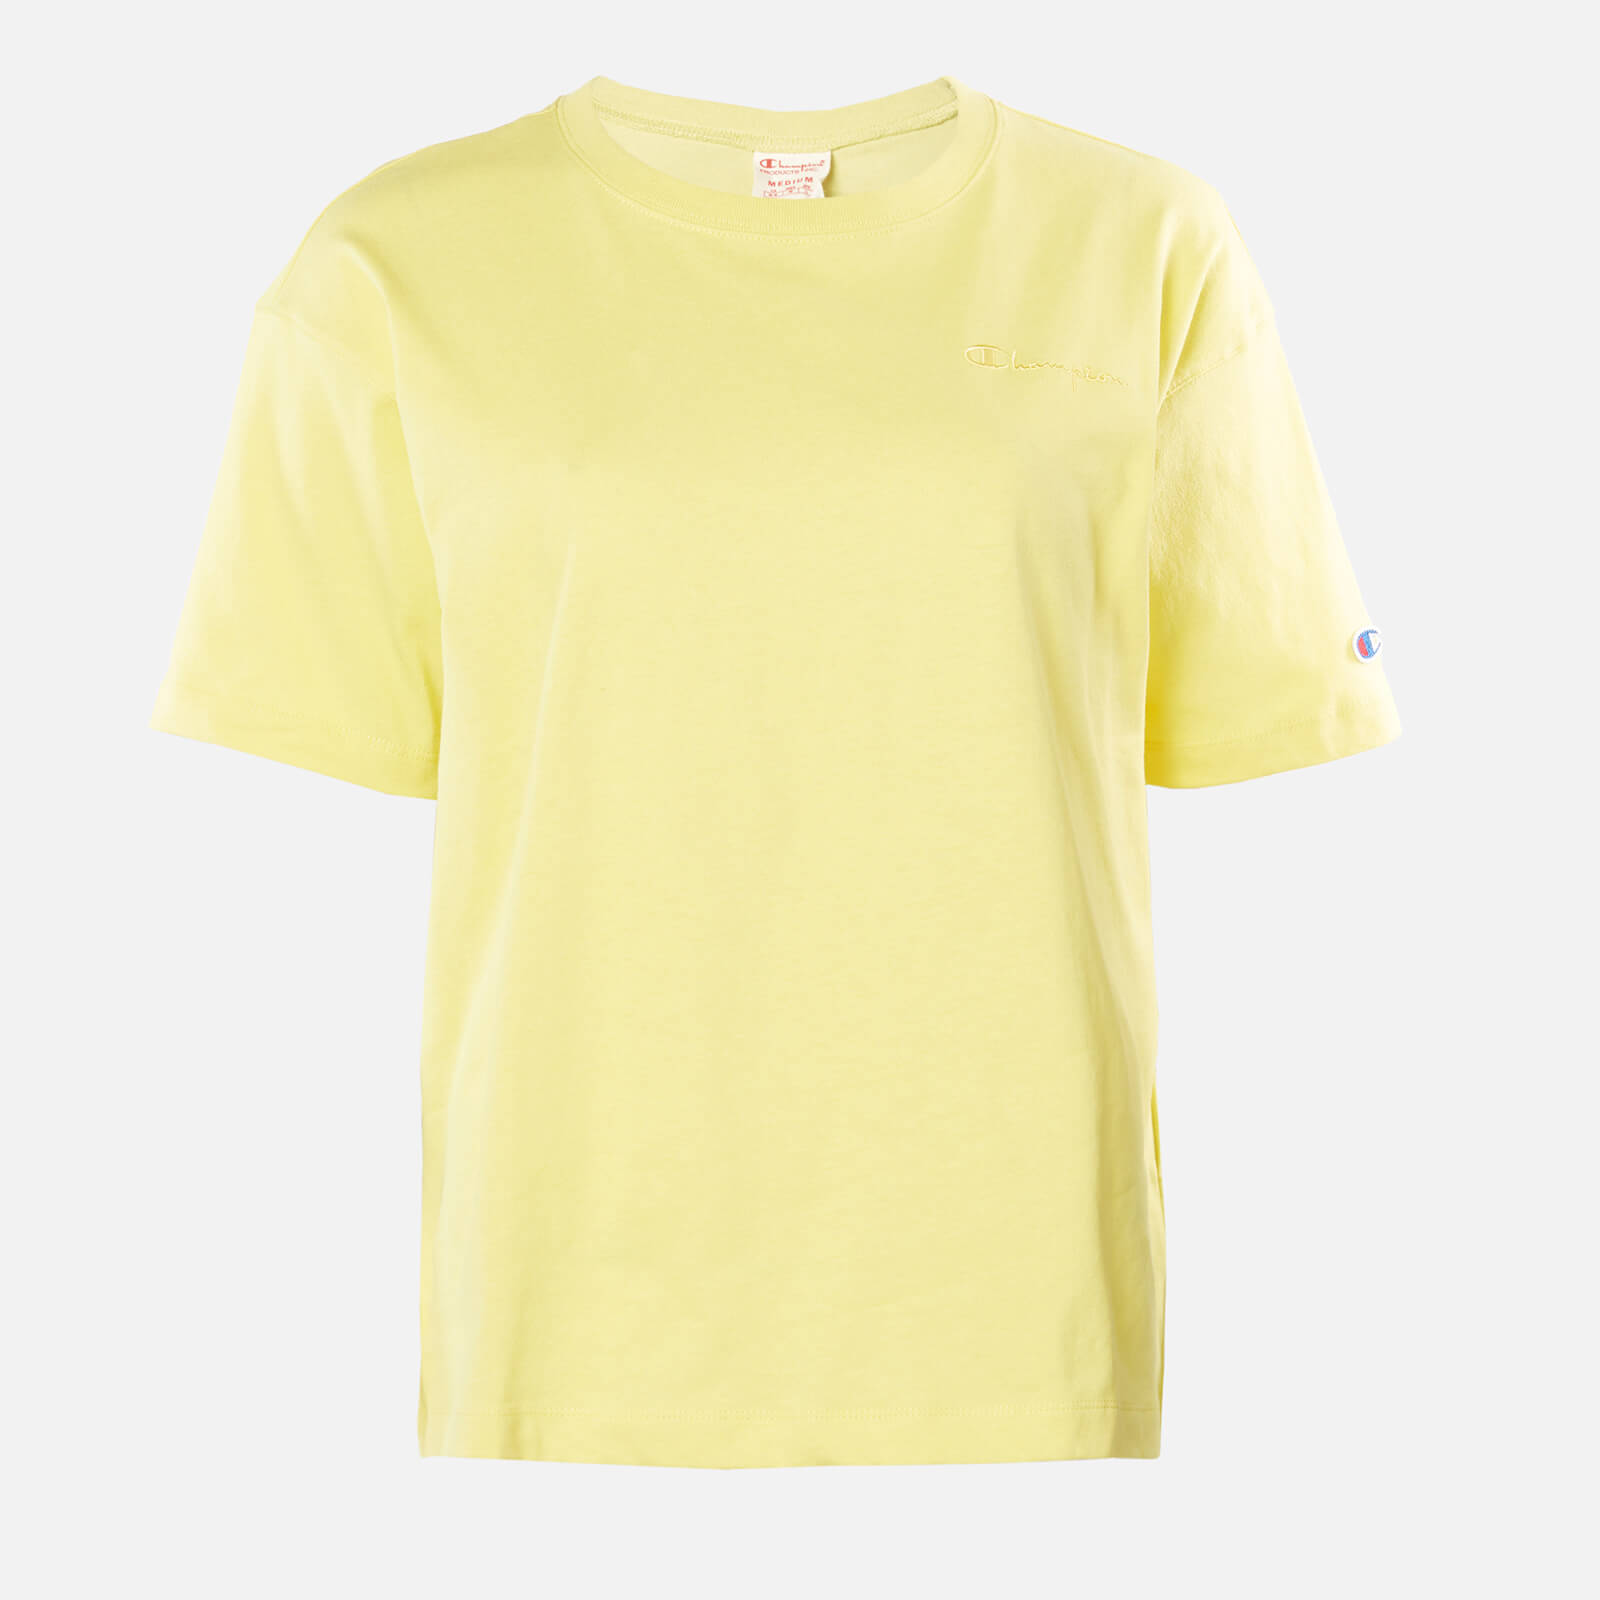 champion tshirt yellow